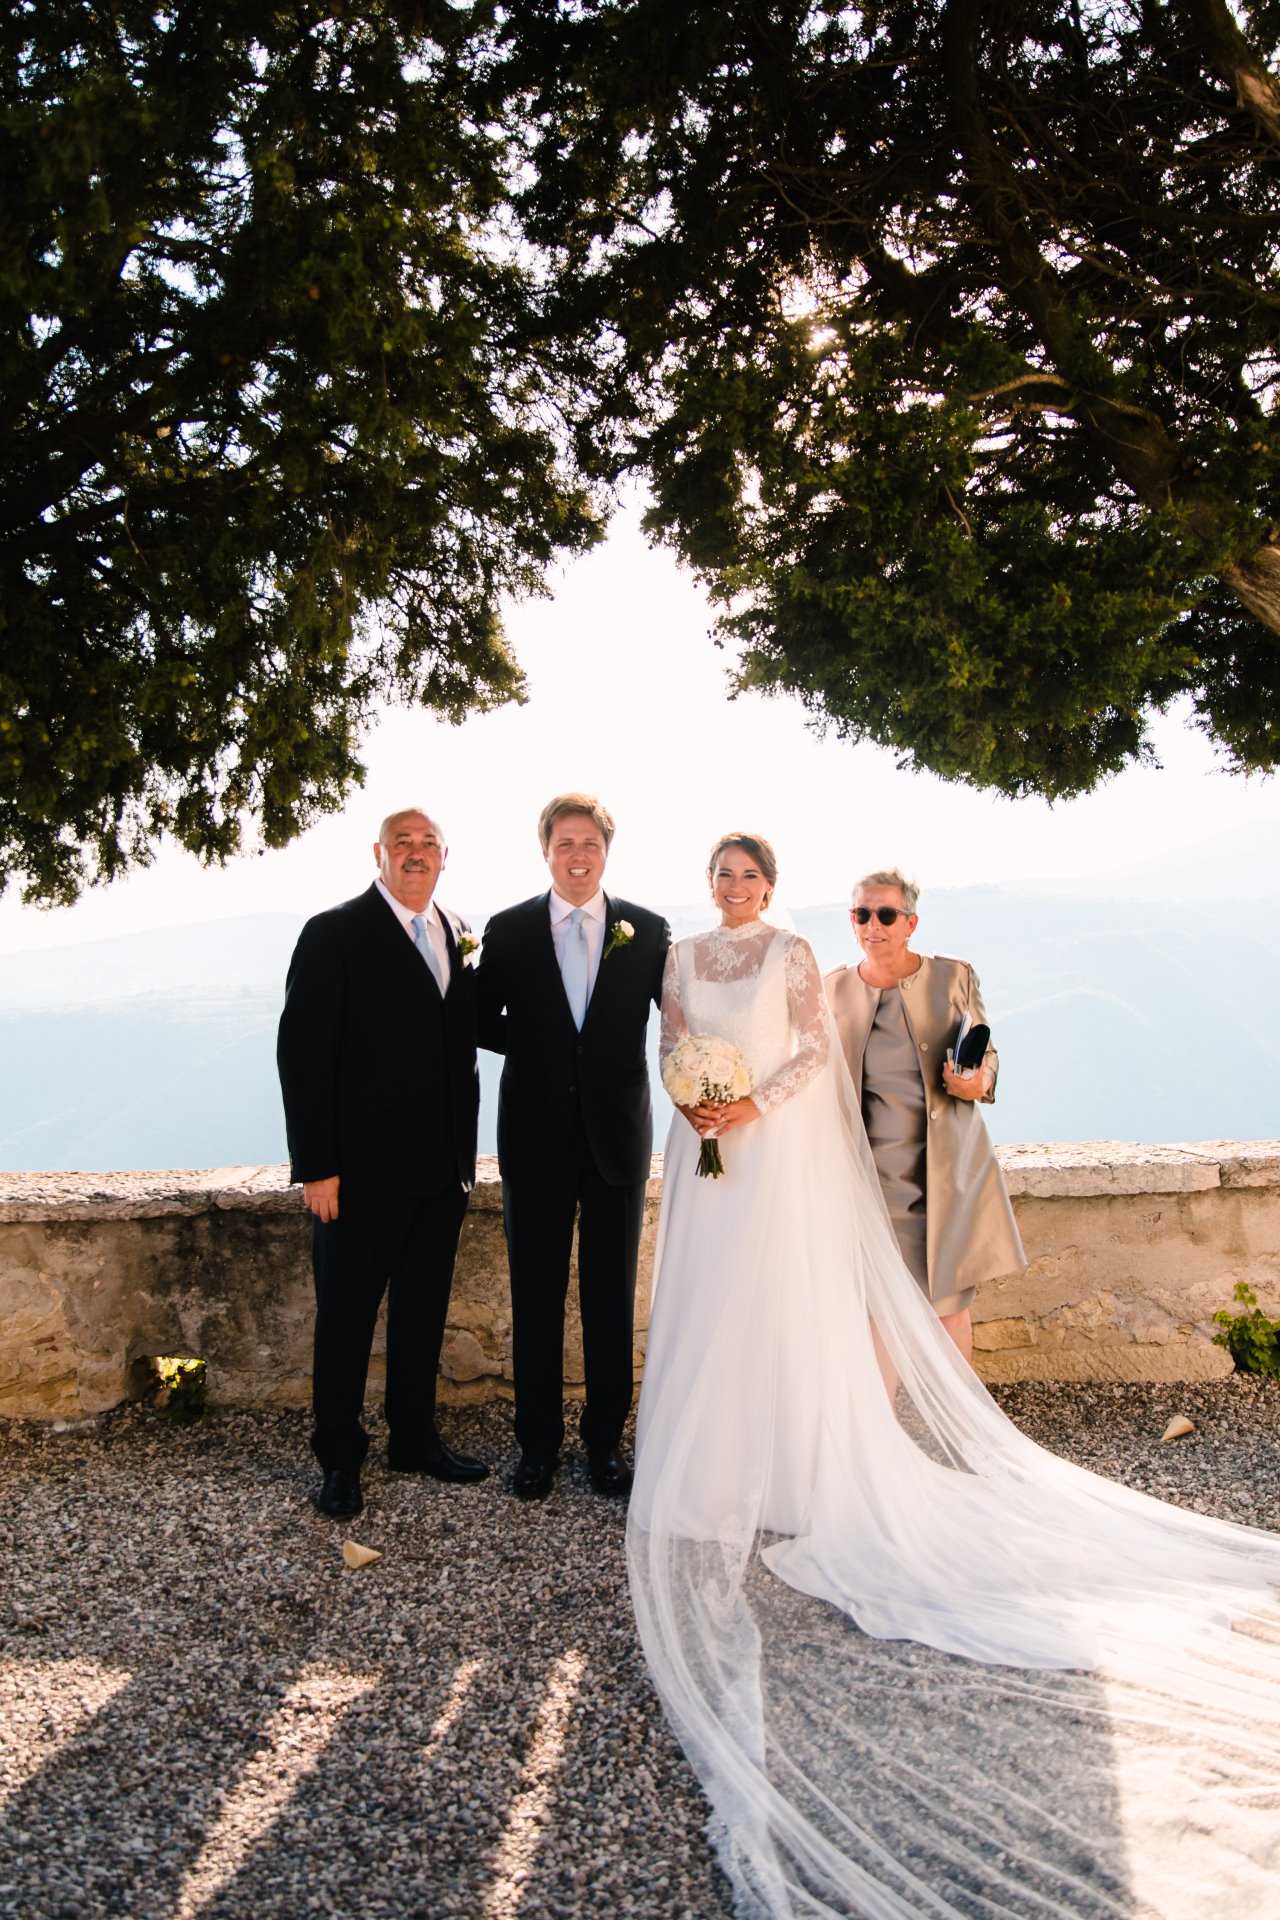 Beat&Edo Italian wedding destination wedding photographer videographer luxury reportage italy amalfi coast tuscany apulia masseria potenti venice